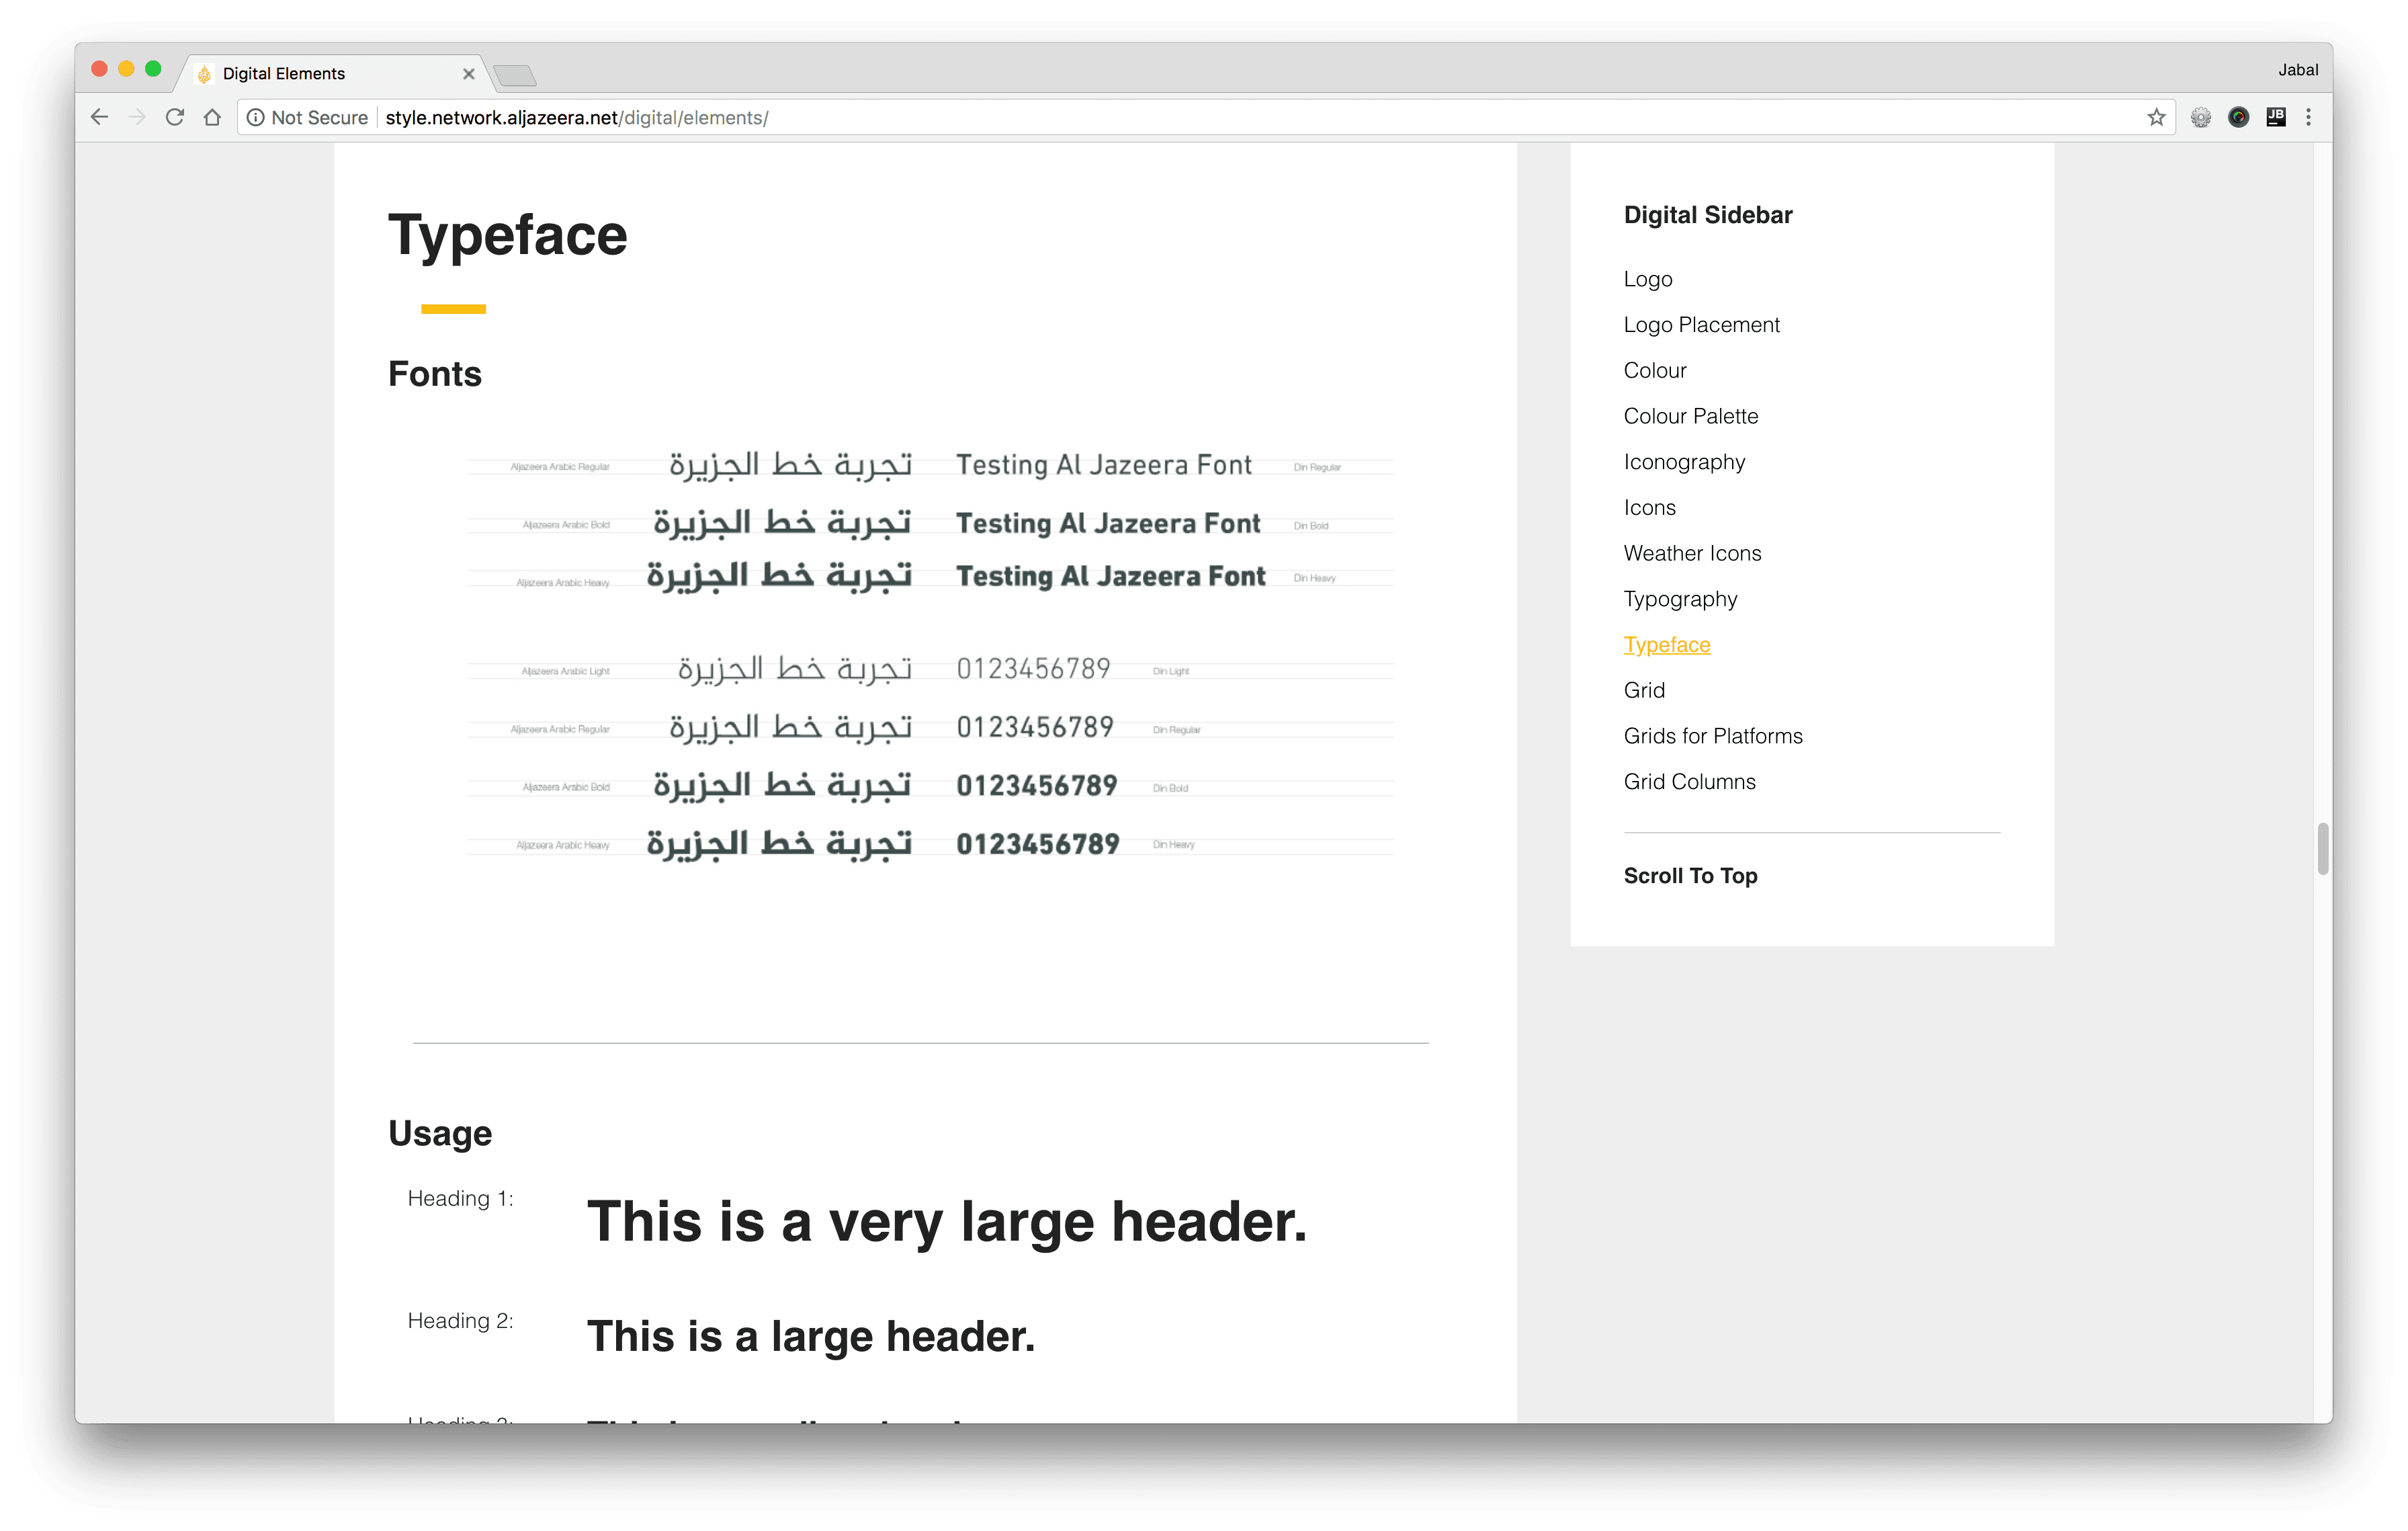 Al Jazeera Design Language System - Typeface